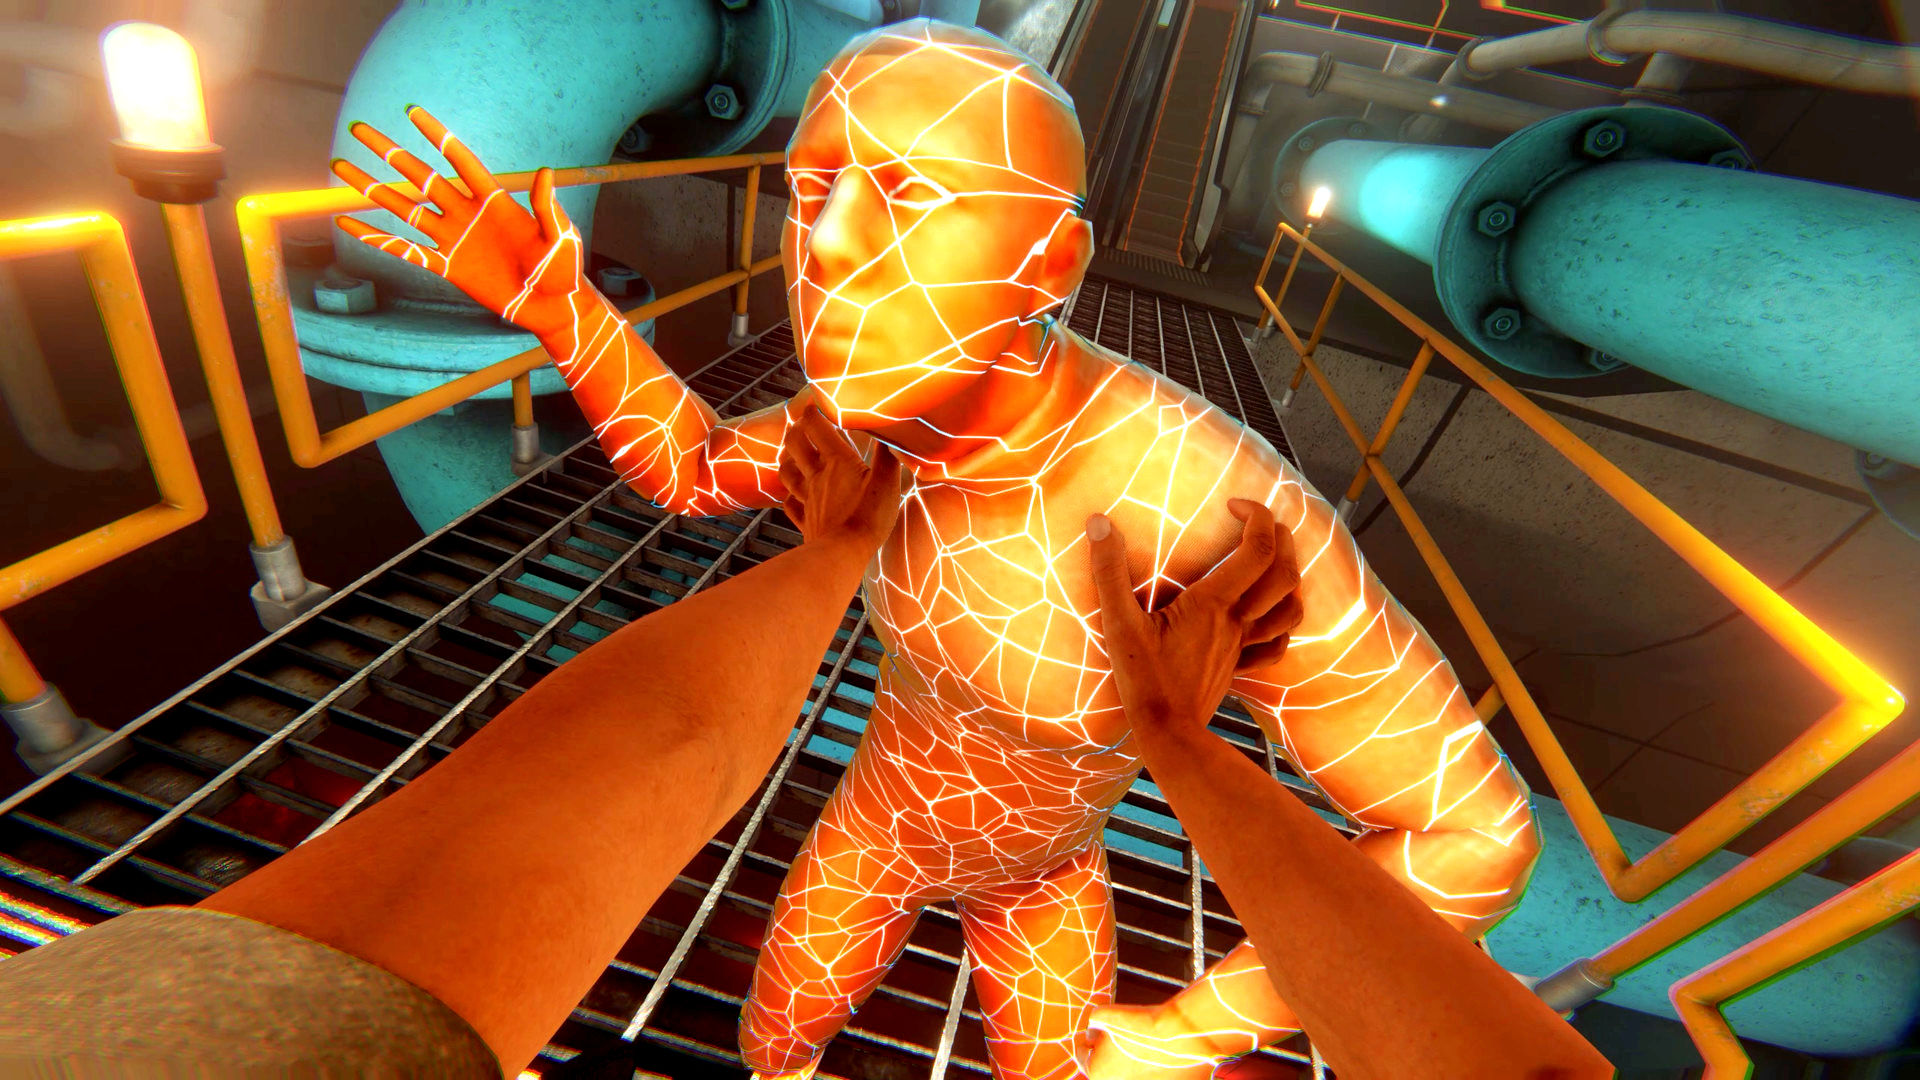 Boneworks VR Follow Up Bonelab Arrives On Oculus Quest 2 This Week